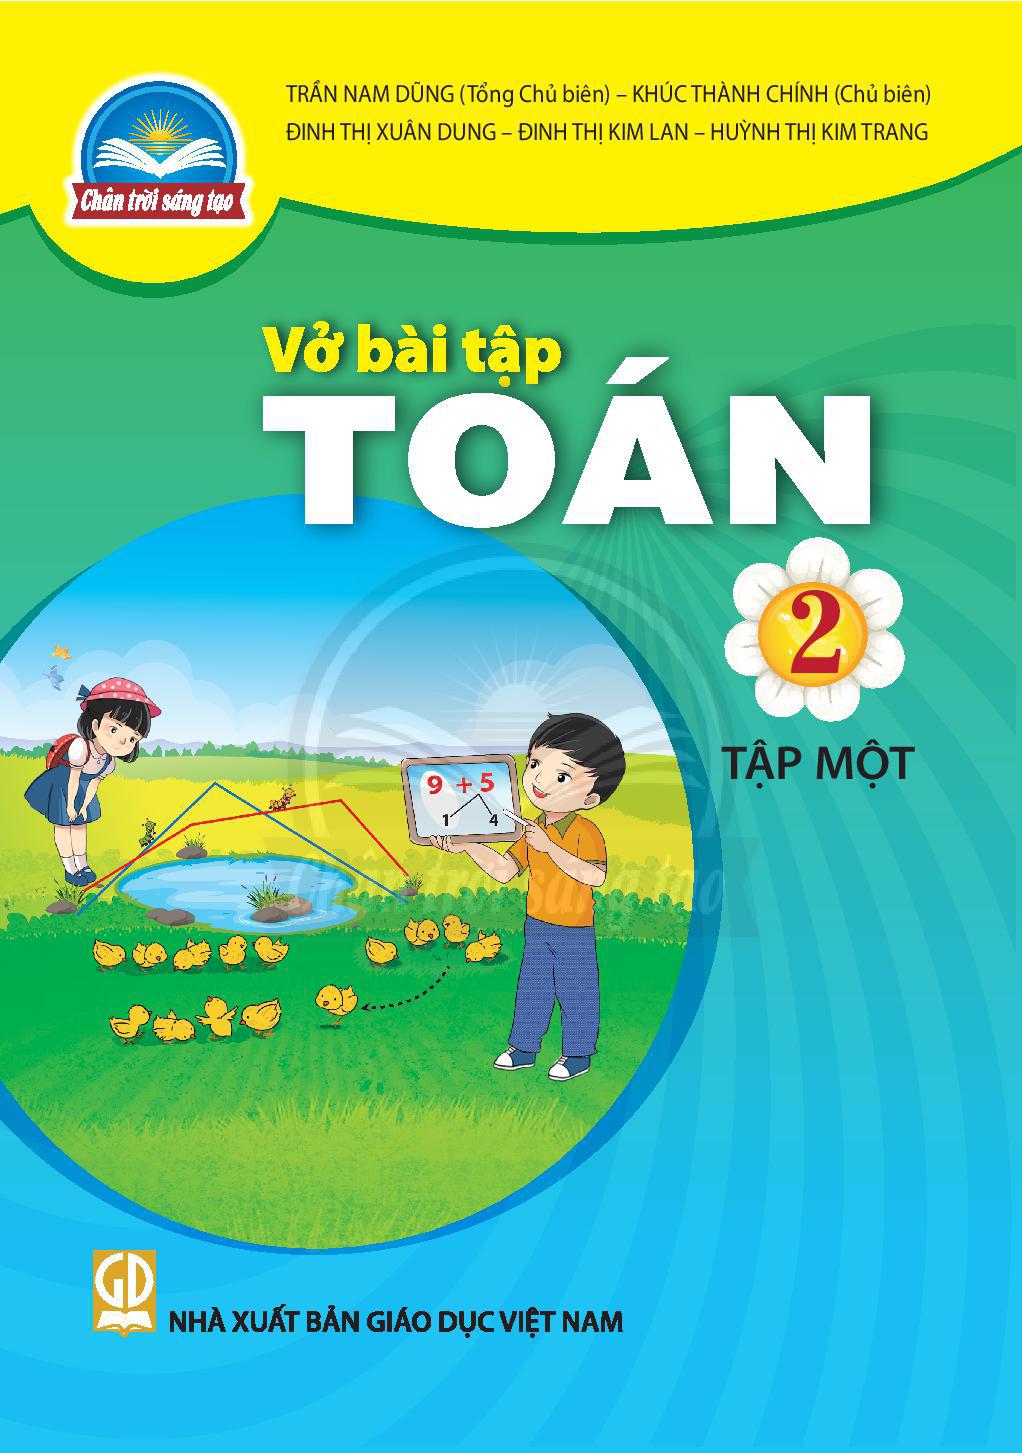 vo-bai-tap-toan-2-tap-mot-1010